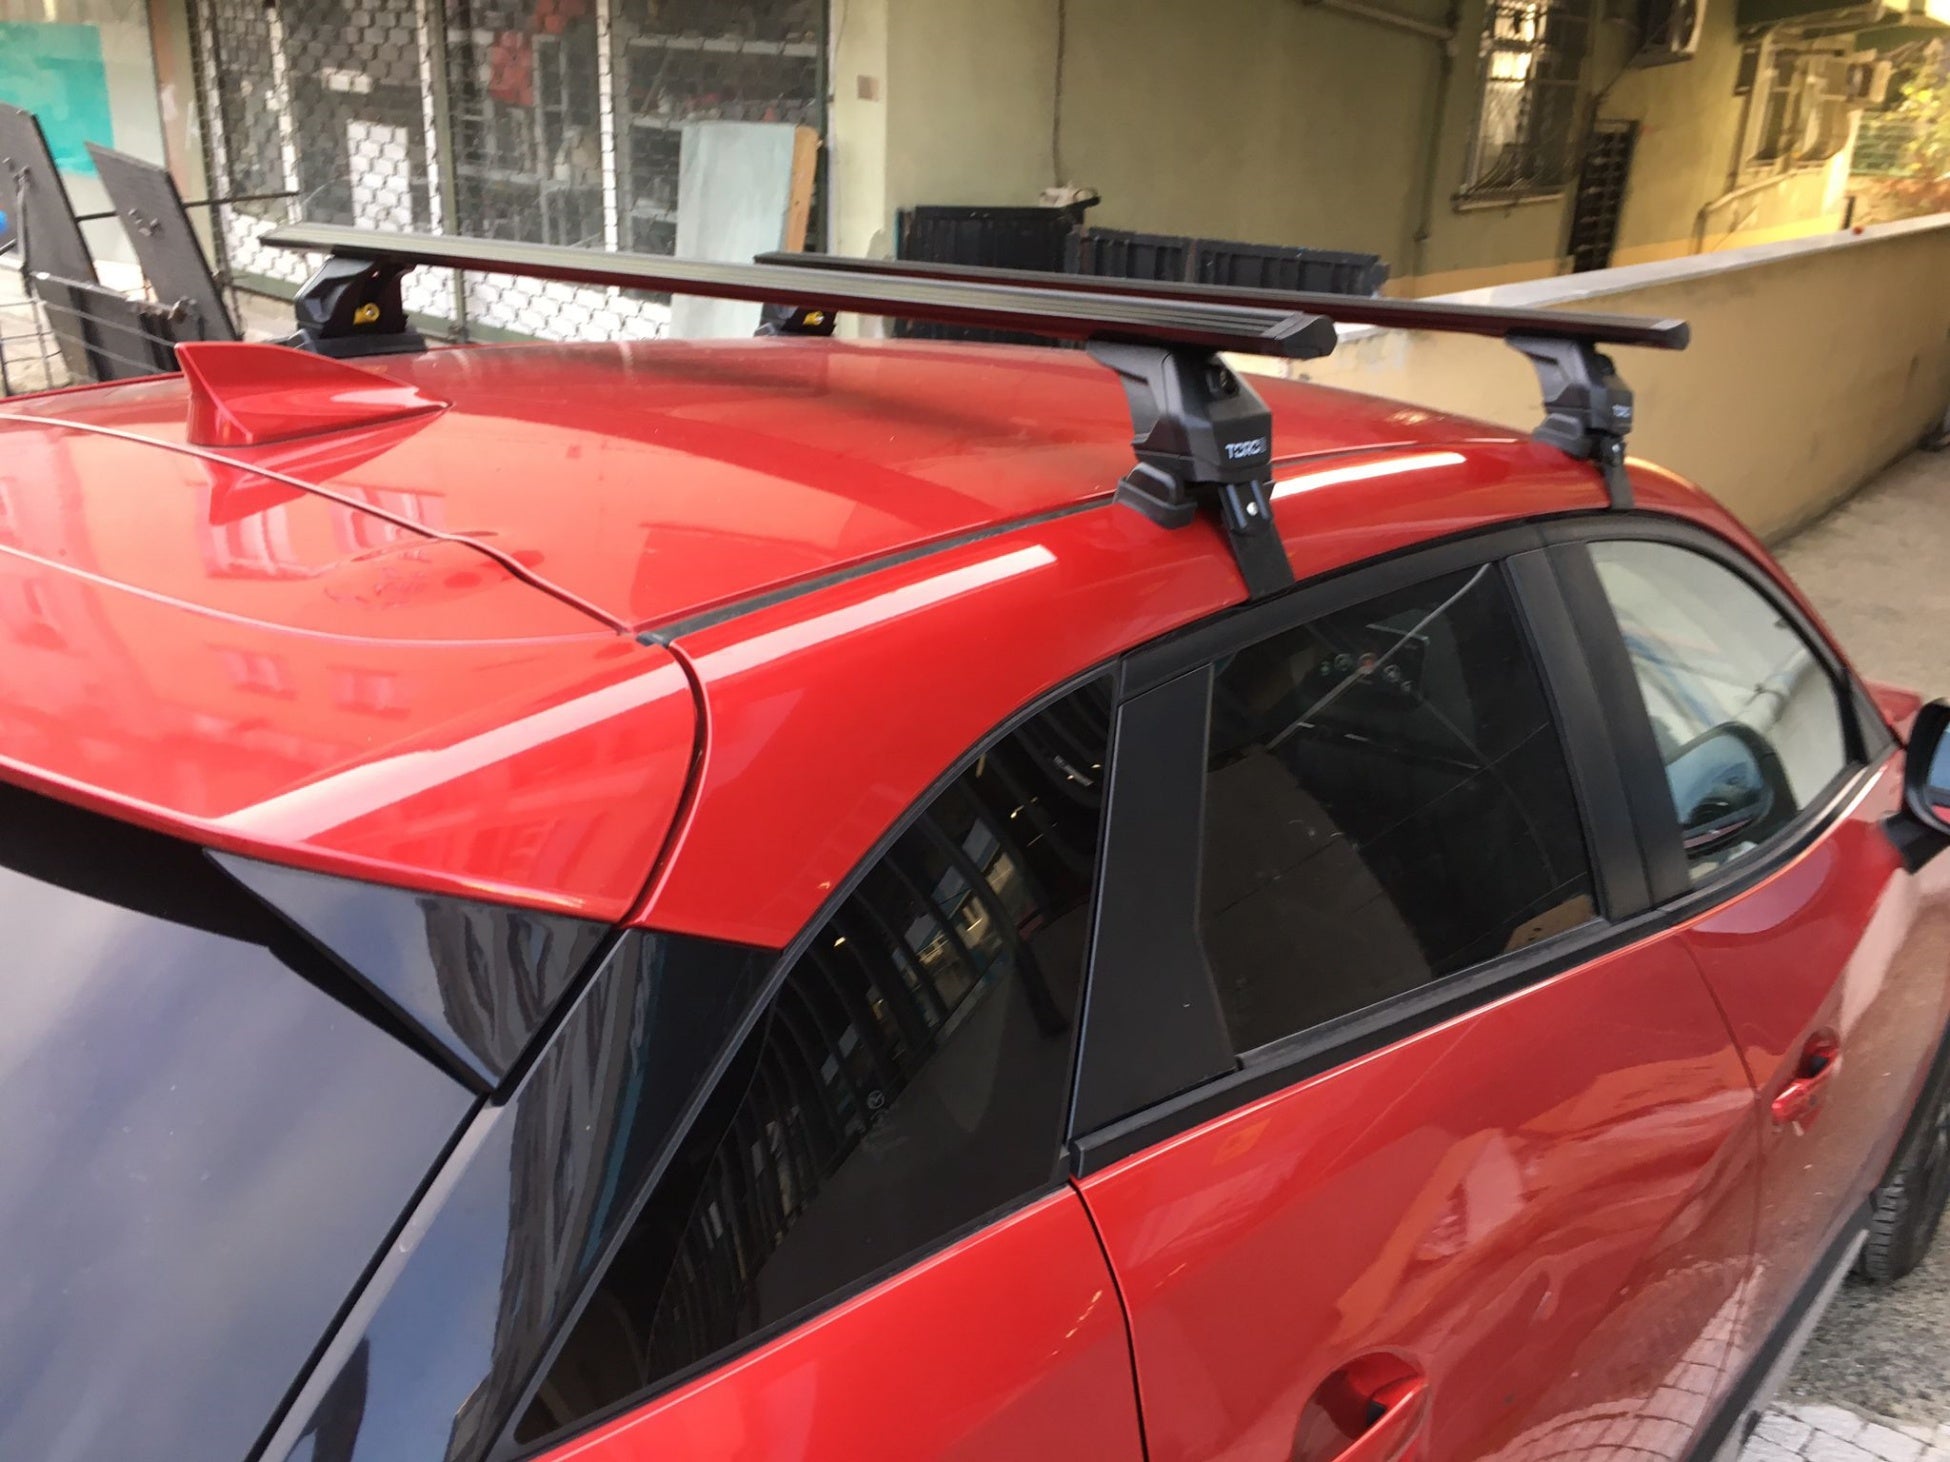 For Mazda CX-3 DK 2016-22 Roof Rack Cross Bars Metal Bracket Normal Roof Alu Black